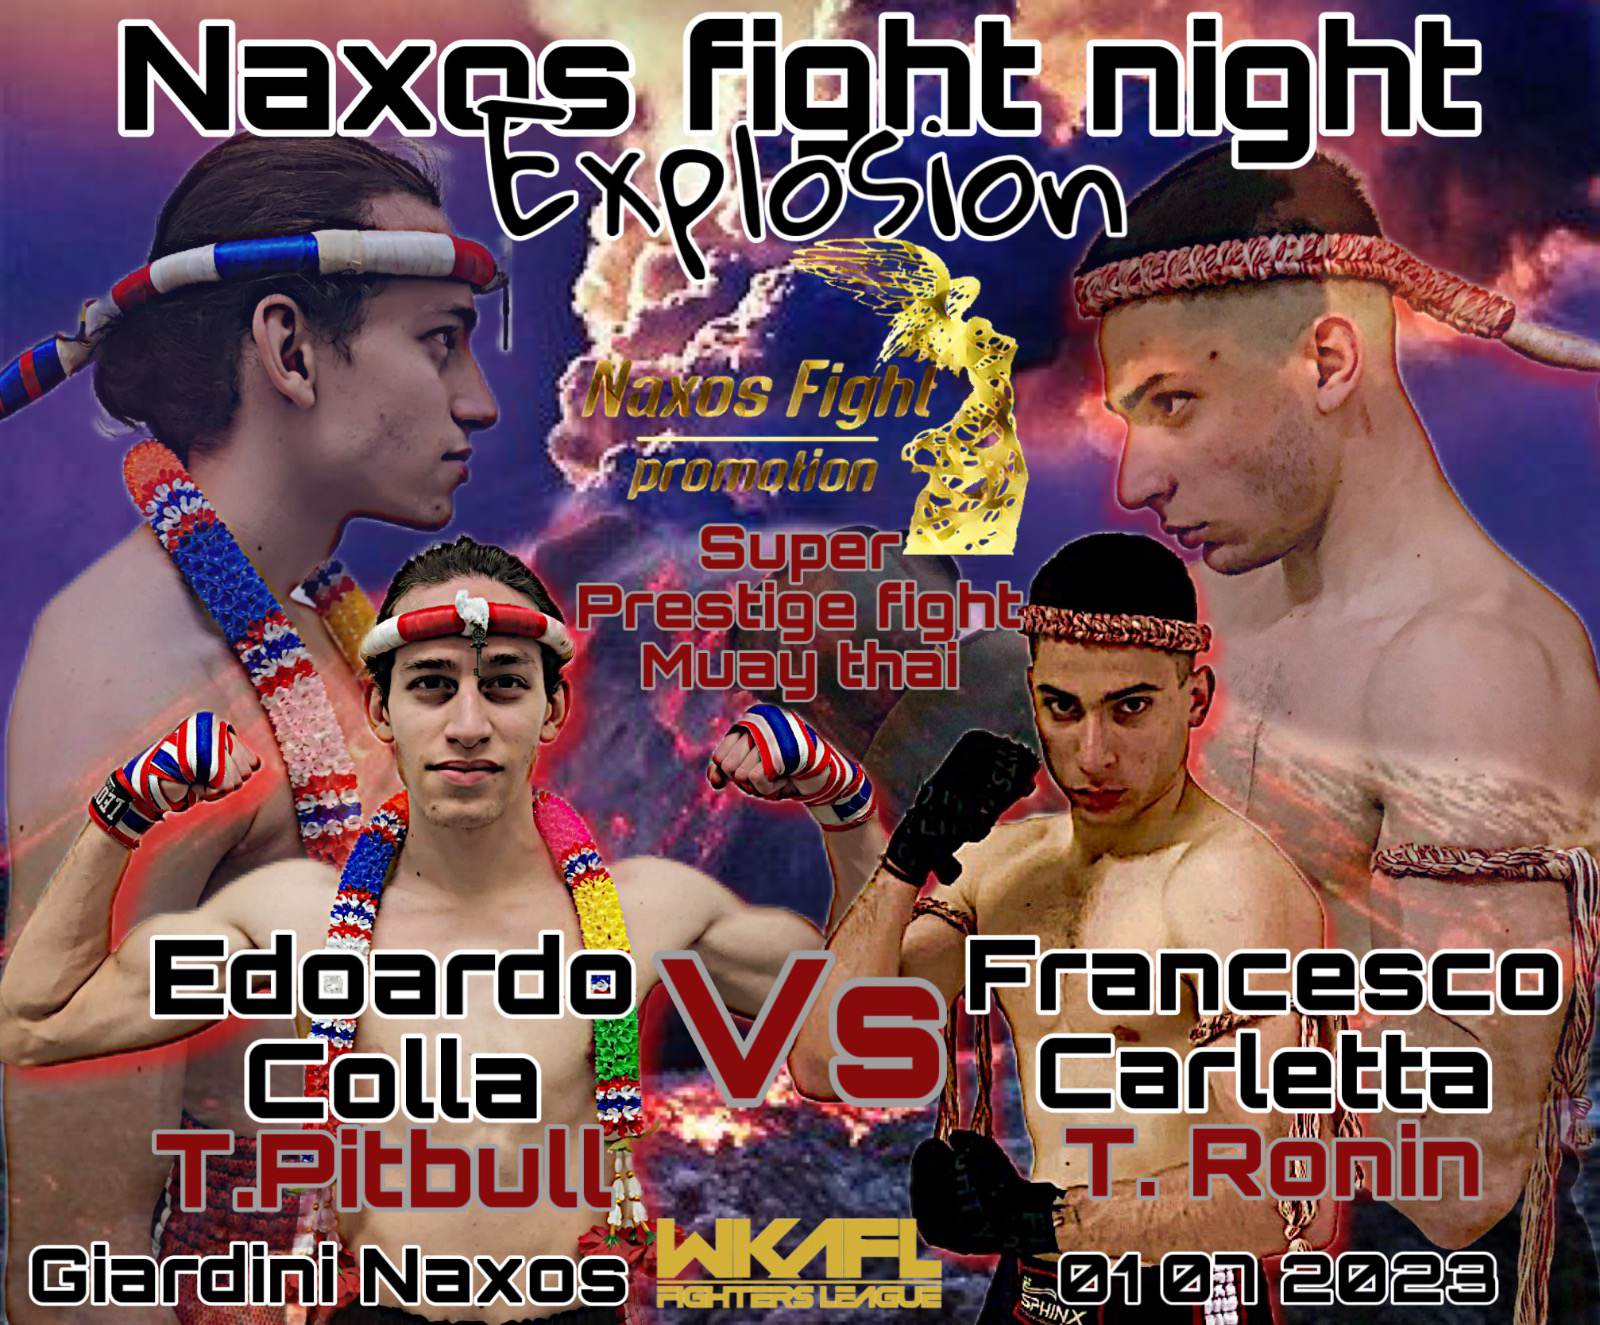 NAXOS FIGHT NIGHT PROMOTIONS